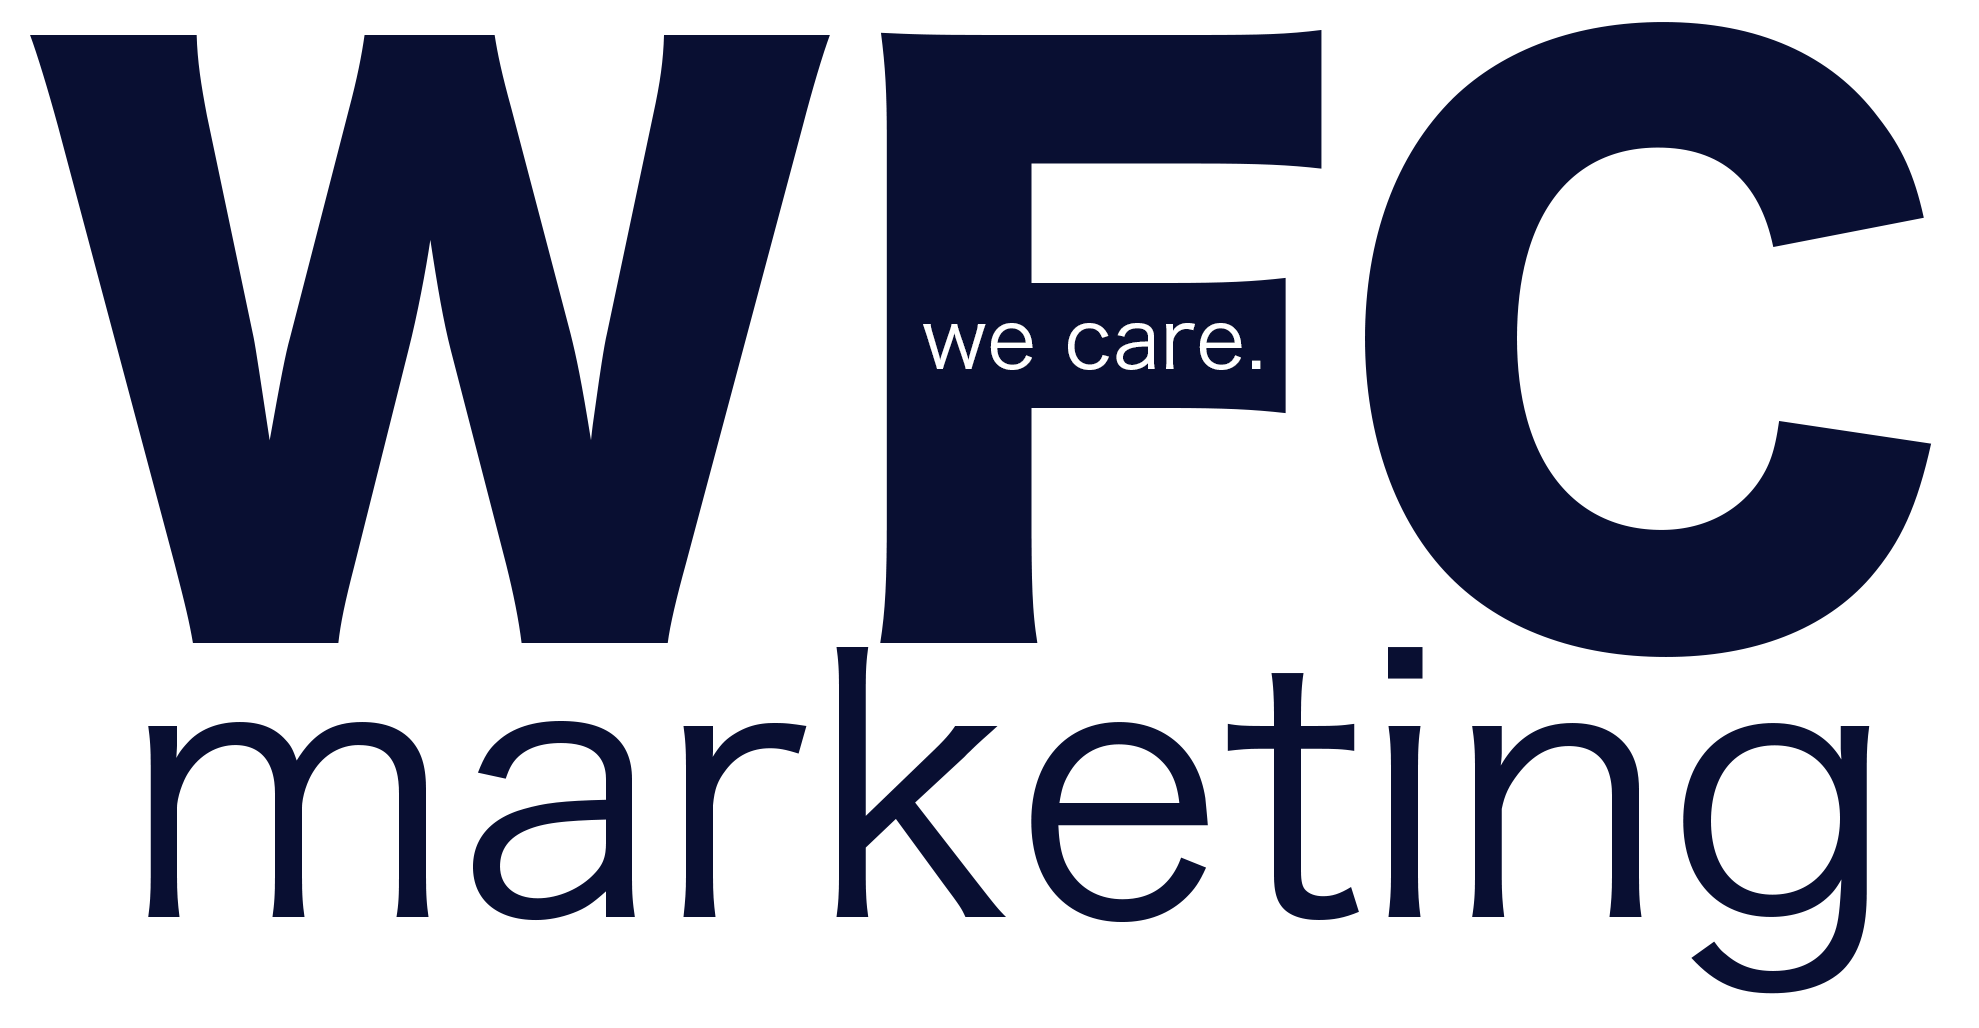 WFC Marketing? WE CARE!